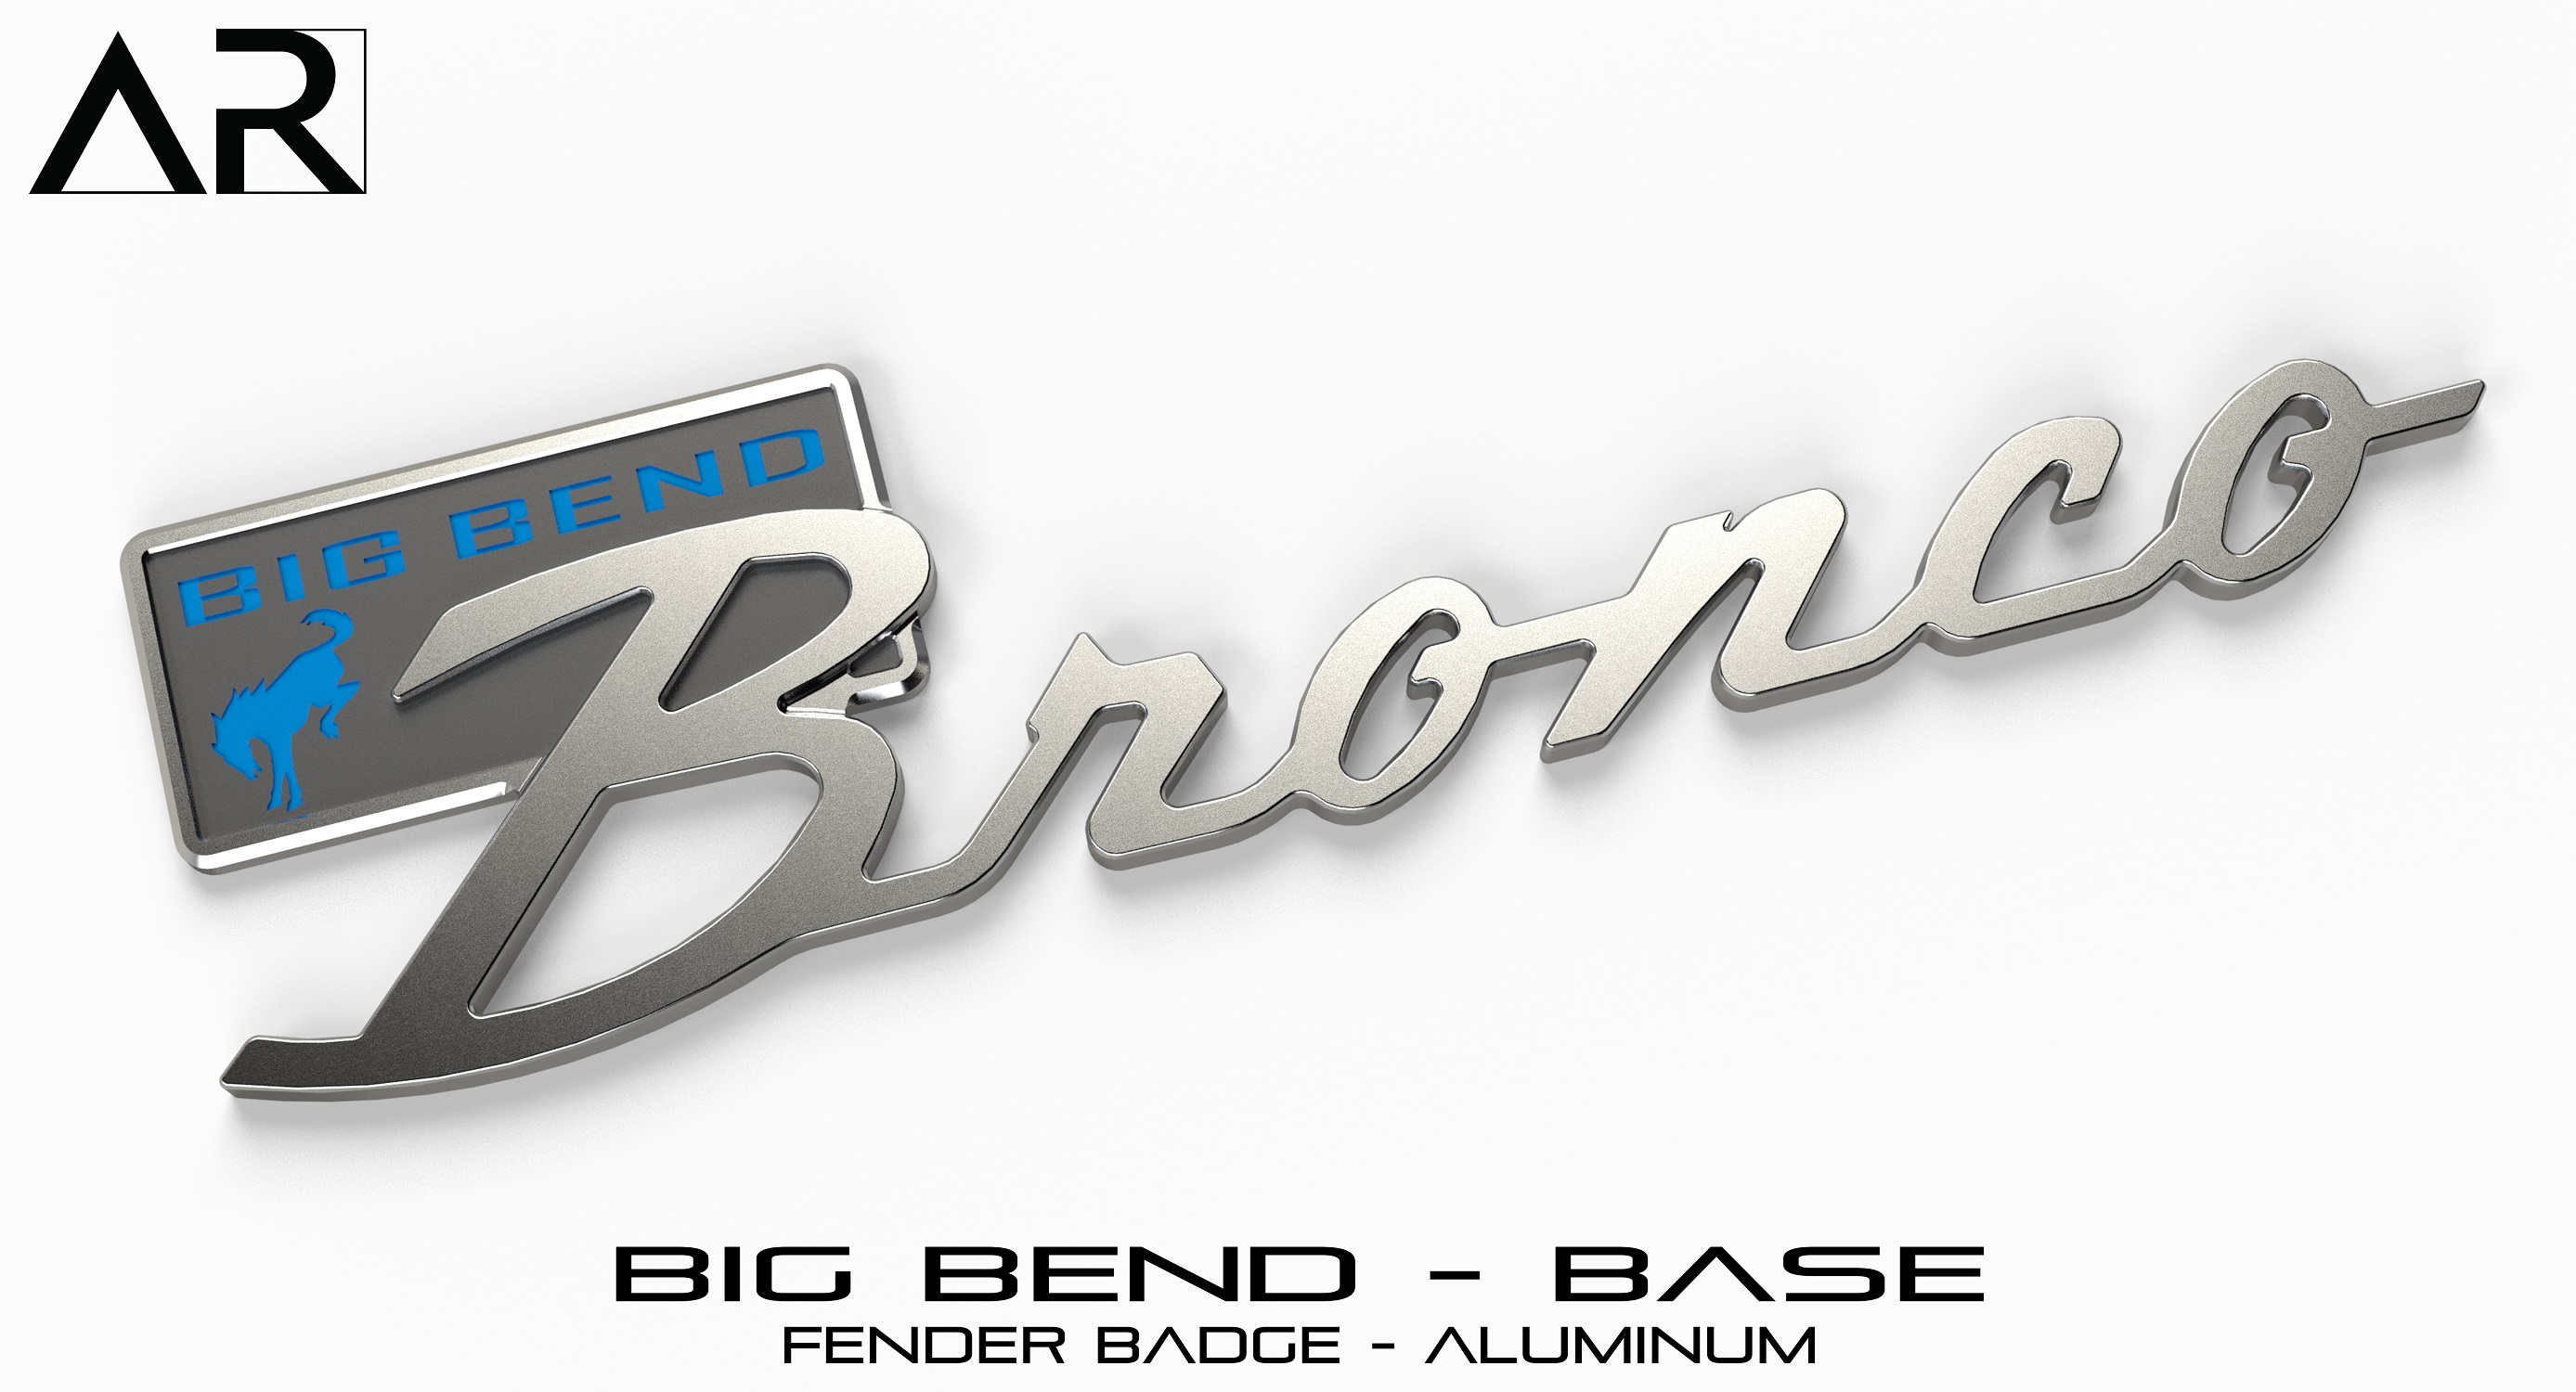 Ford Bronco AR | BRONCO CLASSIC DNA Fender Badge 1601007_B  - Fender Badge  - Big Bend Base - Aluminum